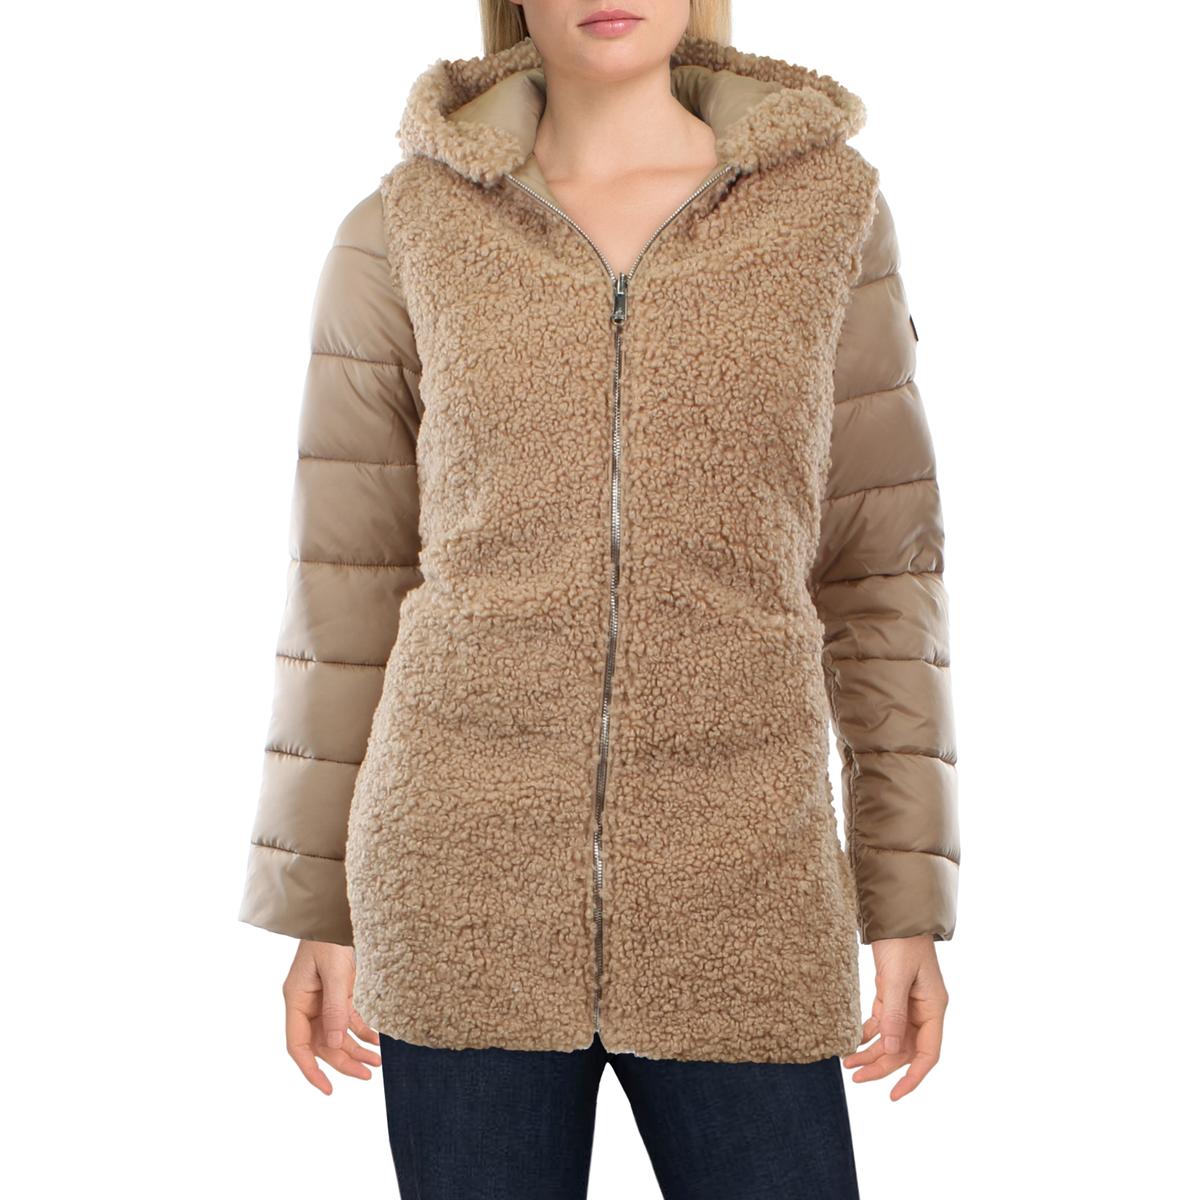 SAM EDELMAN Womens Faux Fur Cold Weather Anorak Jacket